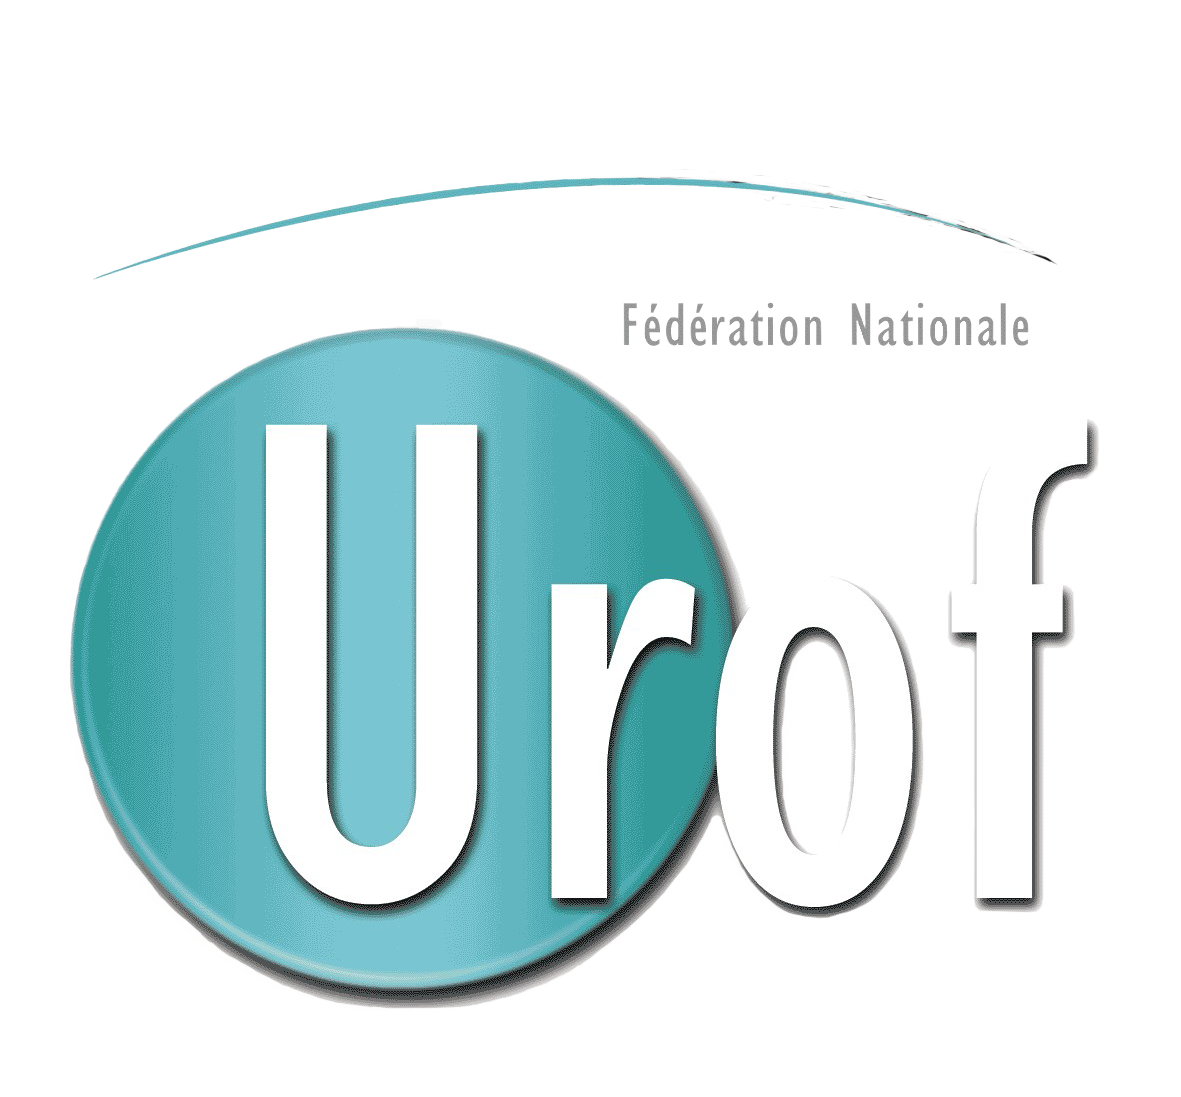 Logo Urof